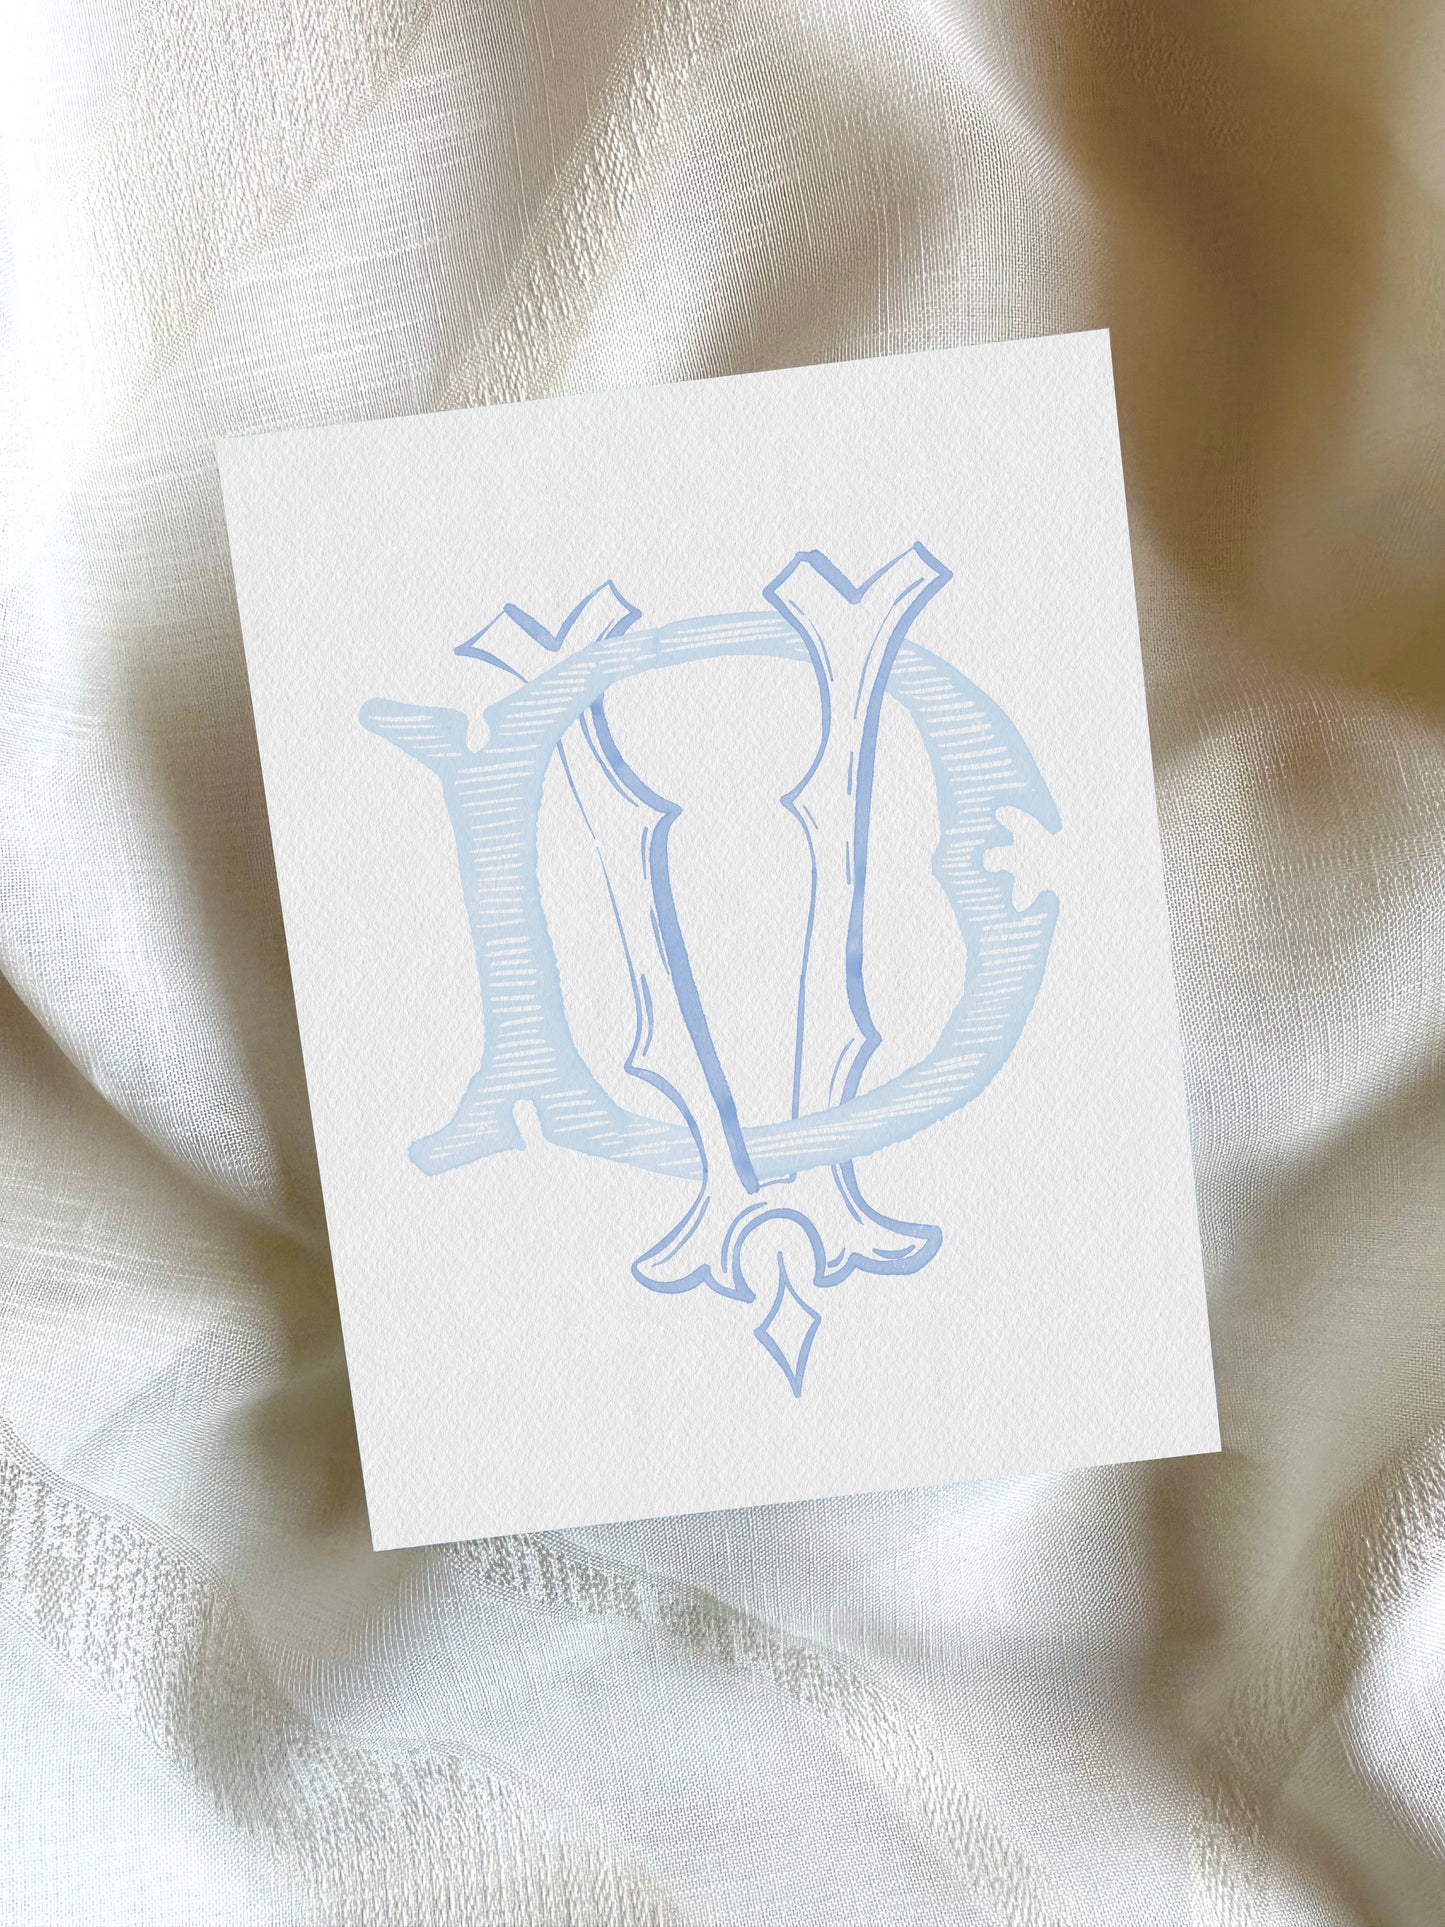 2 Letter Monogram with Letters DV VD | Digital Download - Wedding Monogram SVG, Personal Logo, Wedding Logo for Wedding Invitations The Wedding Crest Lab